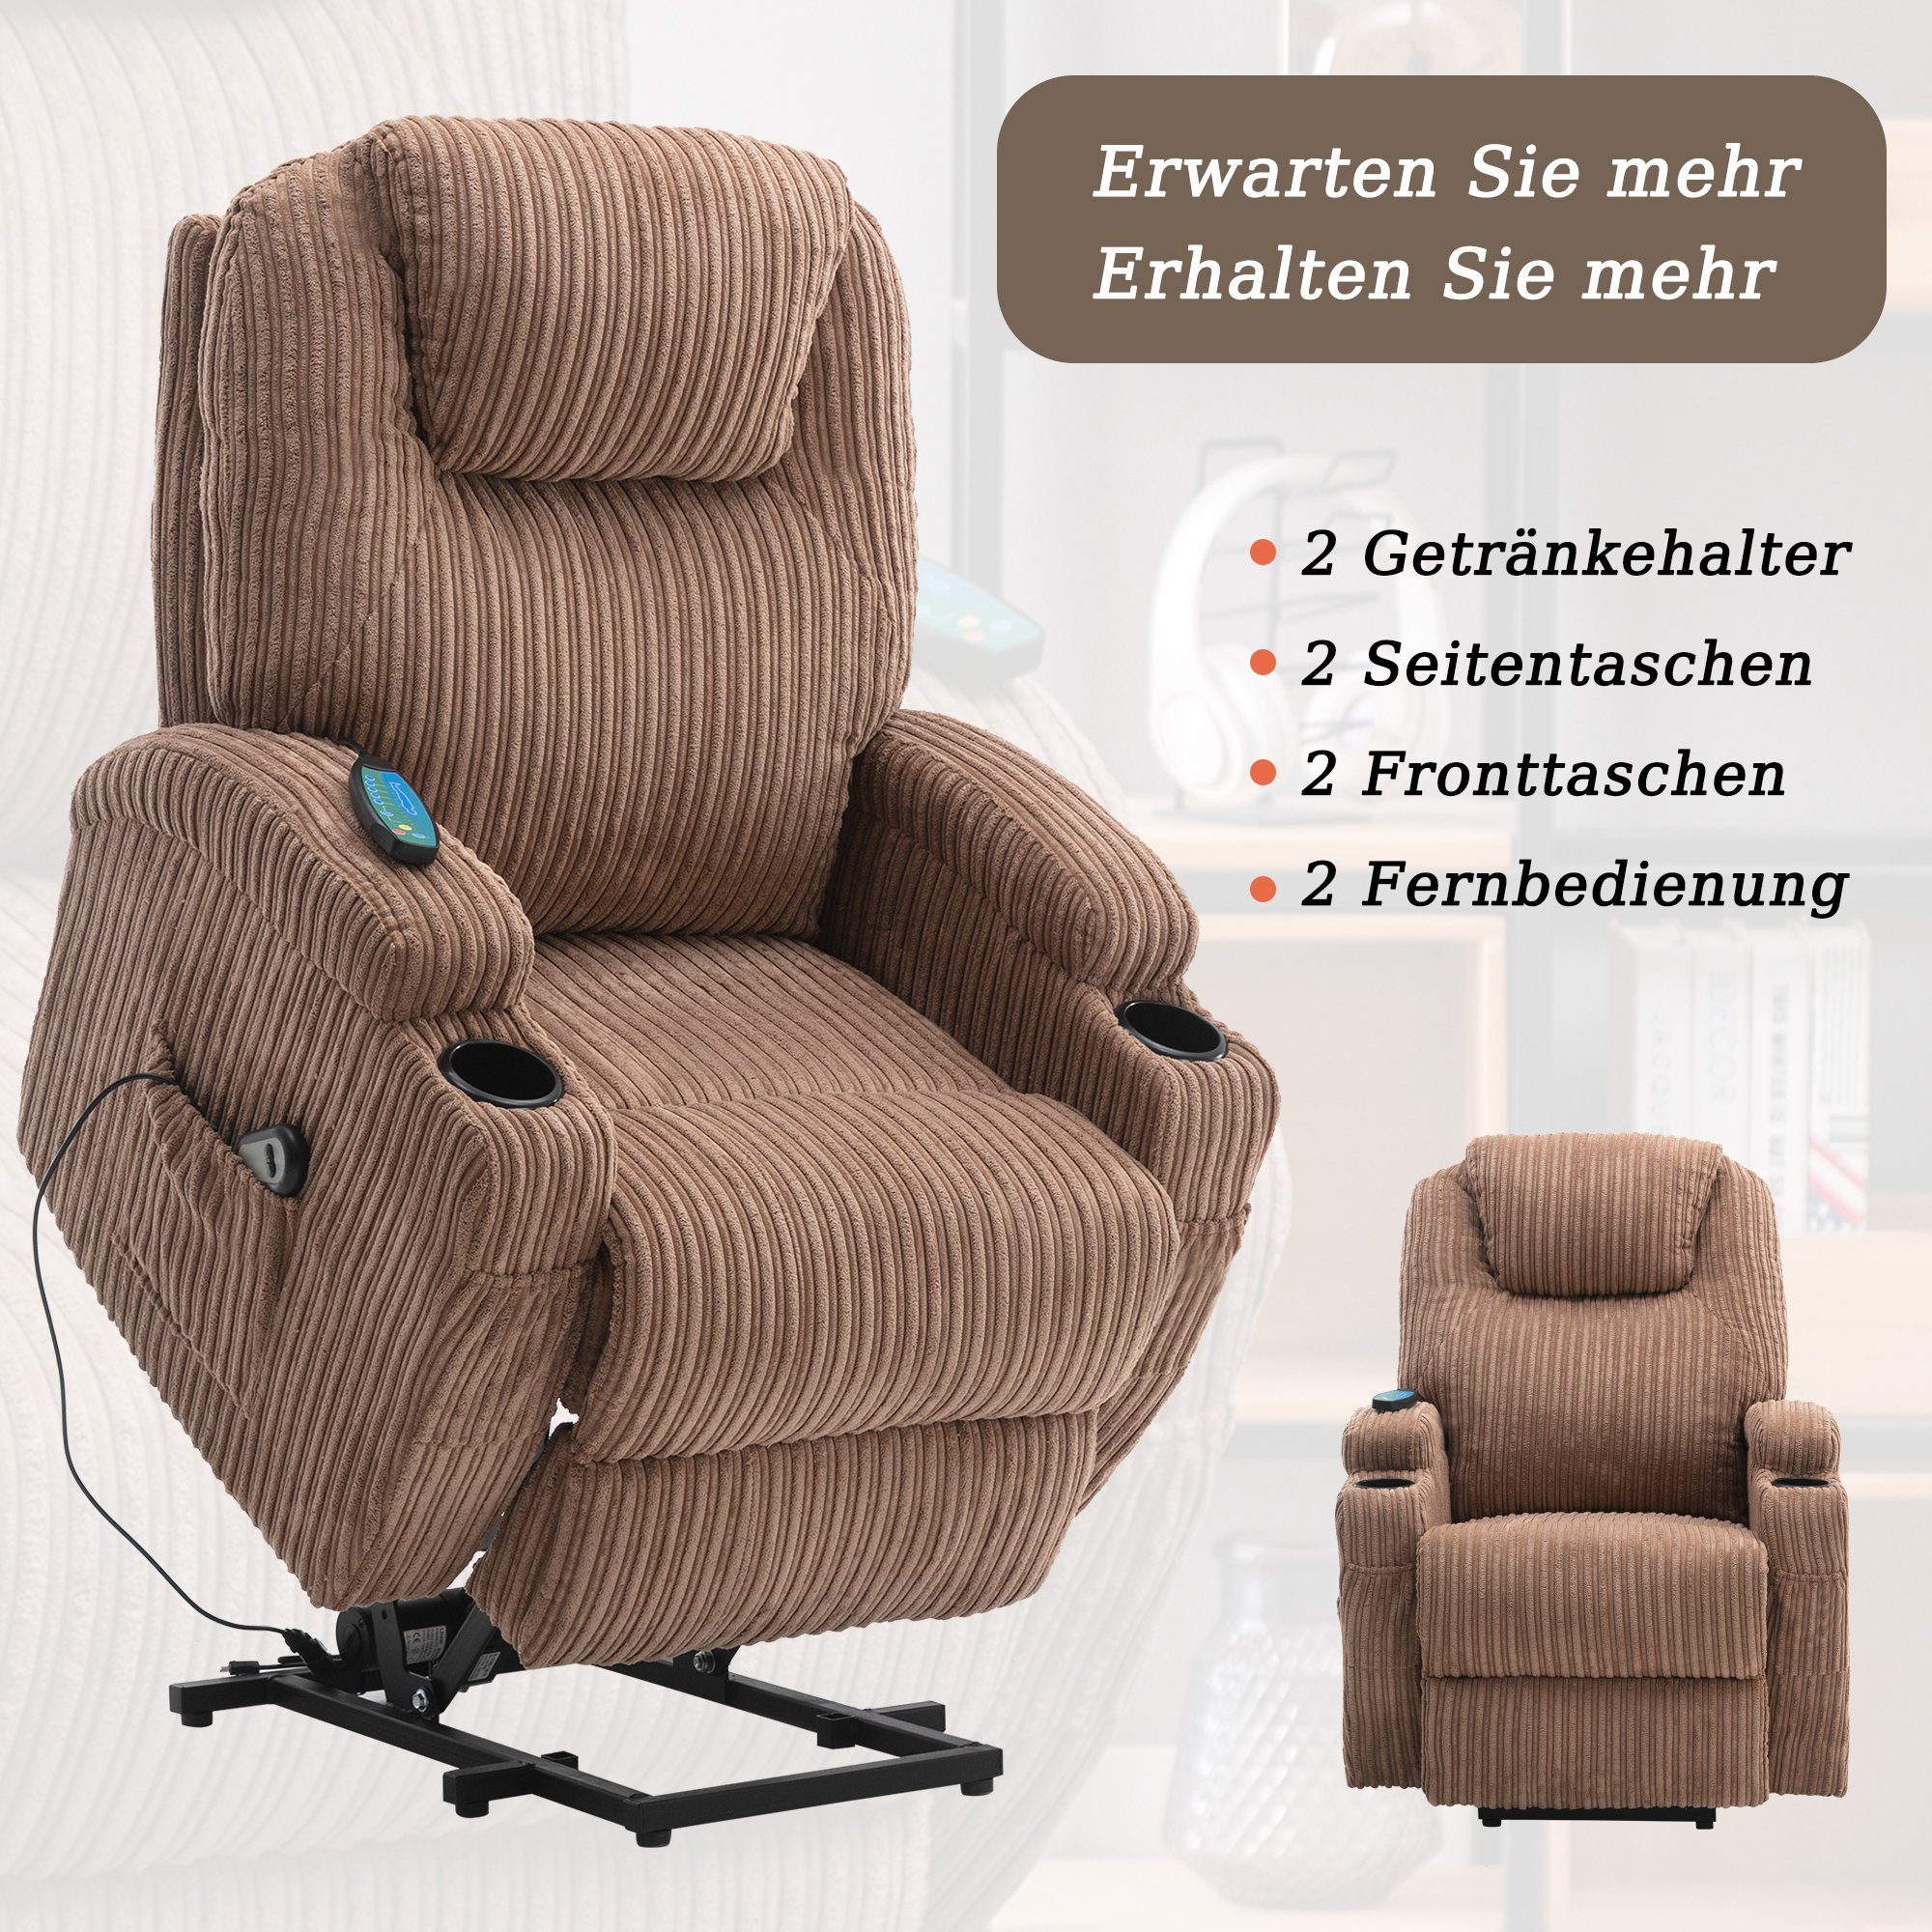 Ulife TV-Sessel Elektrisch Verstellbarer mit relaxfuntion Massagesesel Sesse Braun